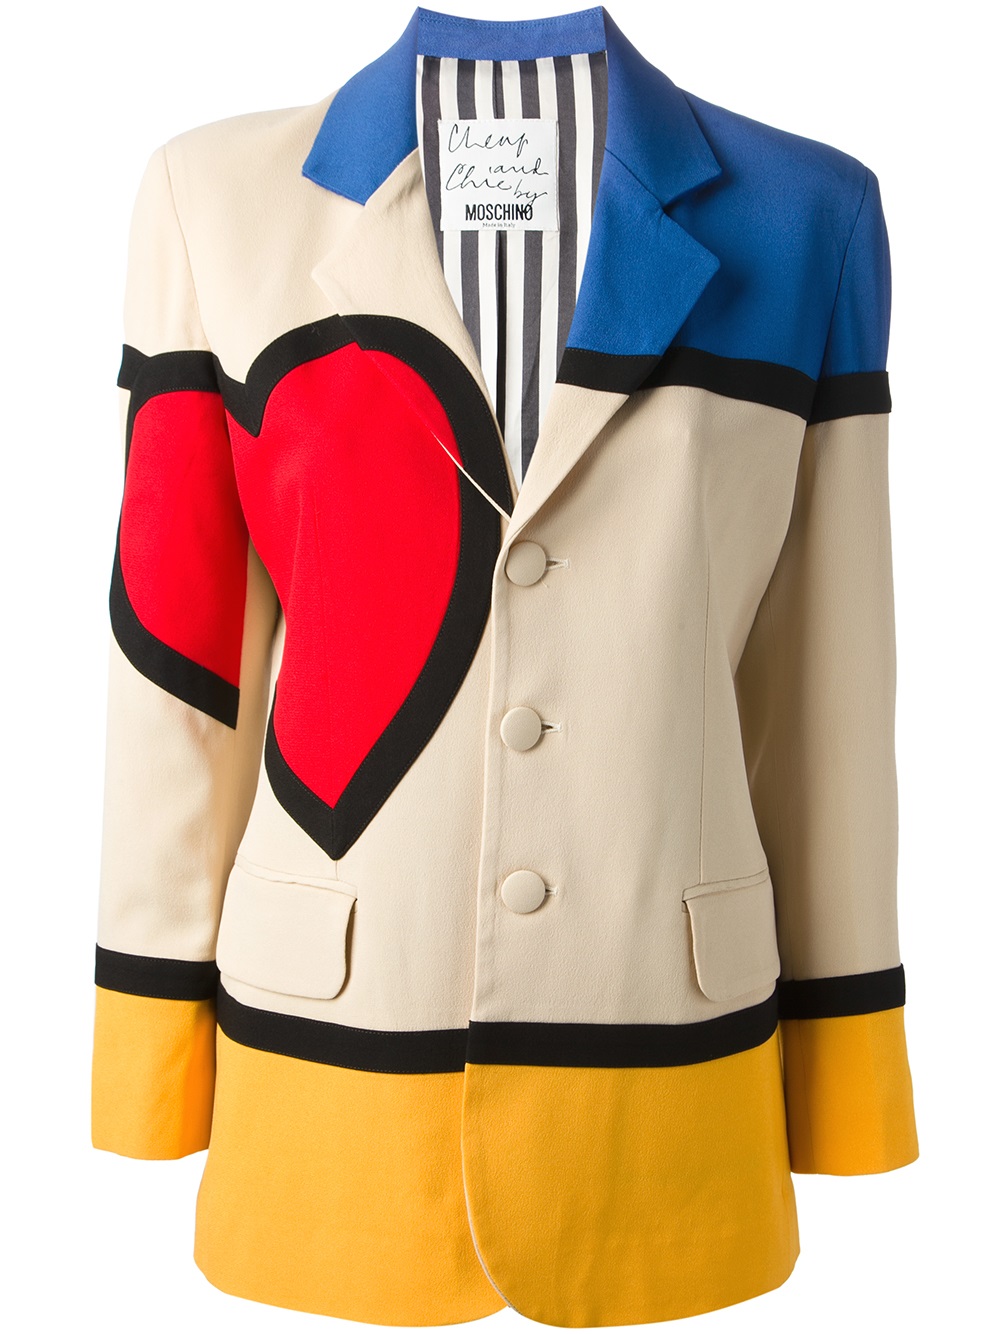 Moschino Mondrian Jacket in Brown | Lyst